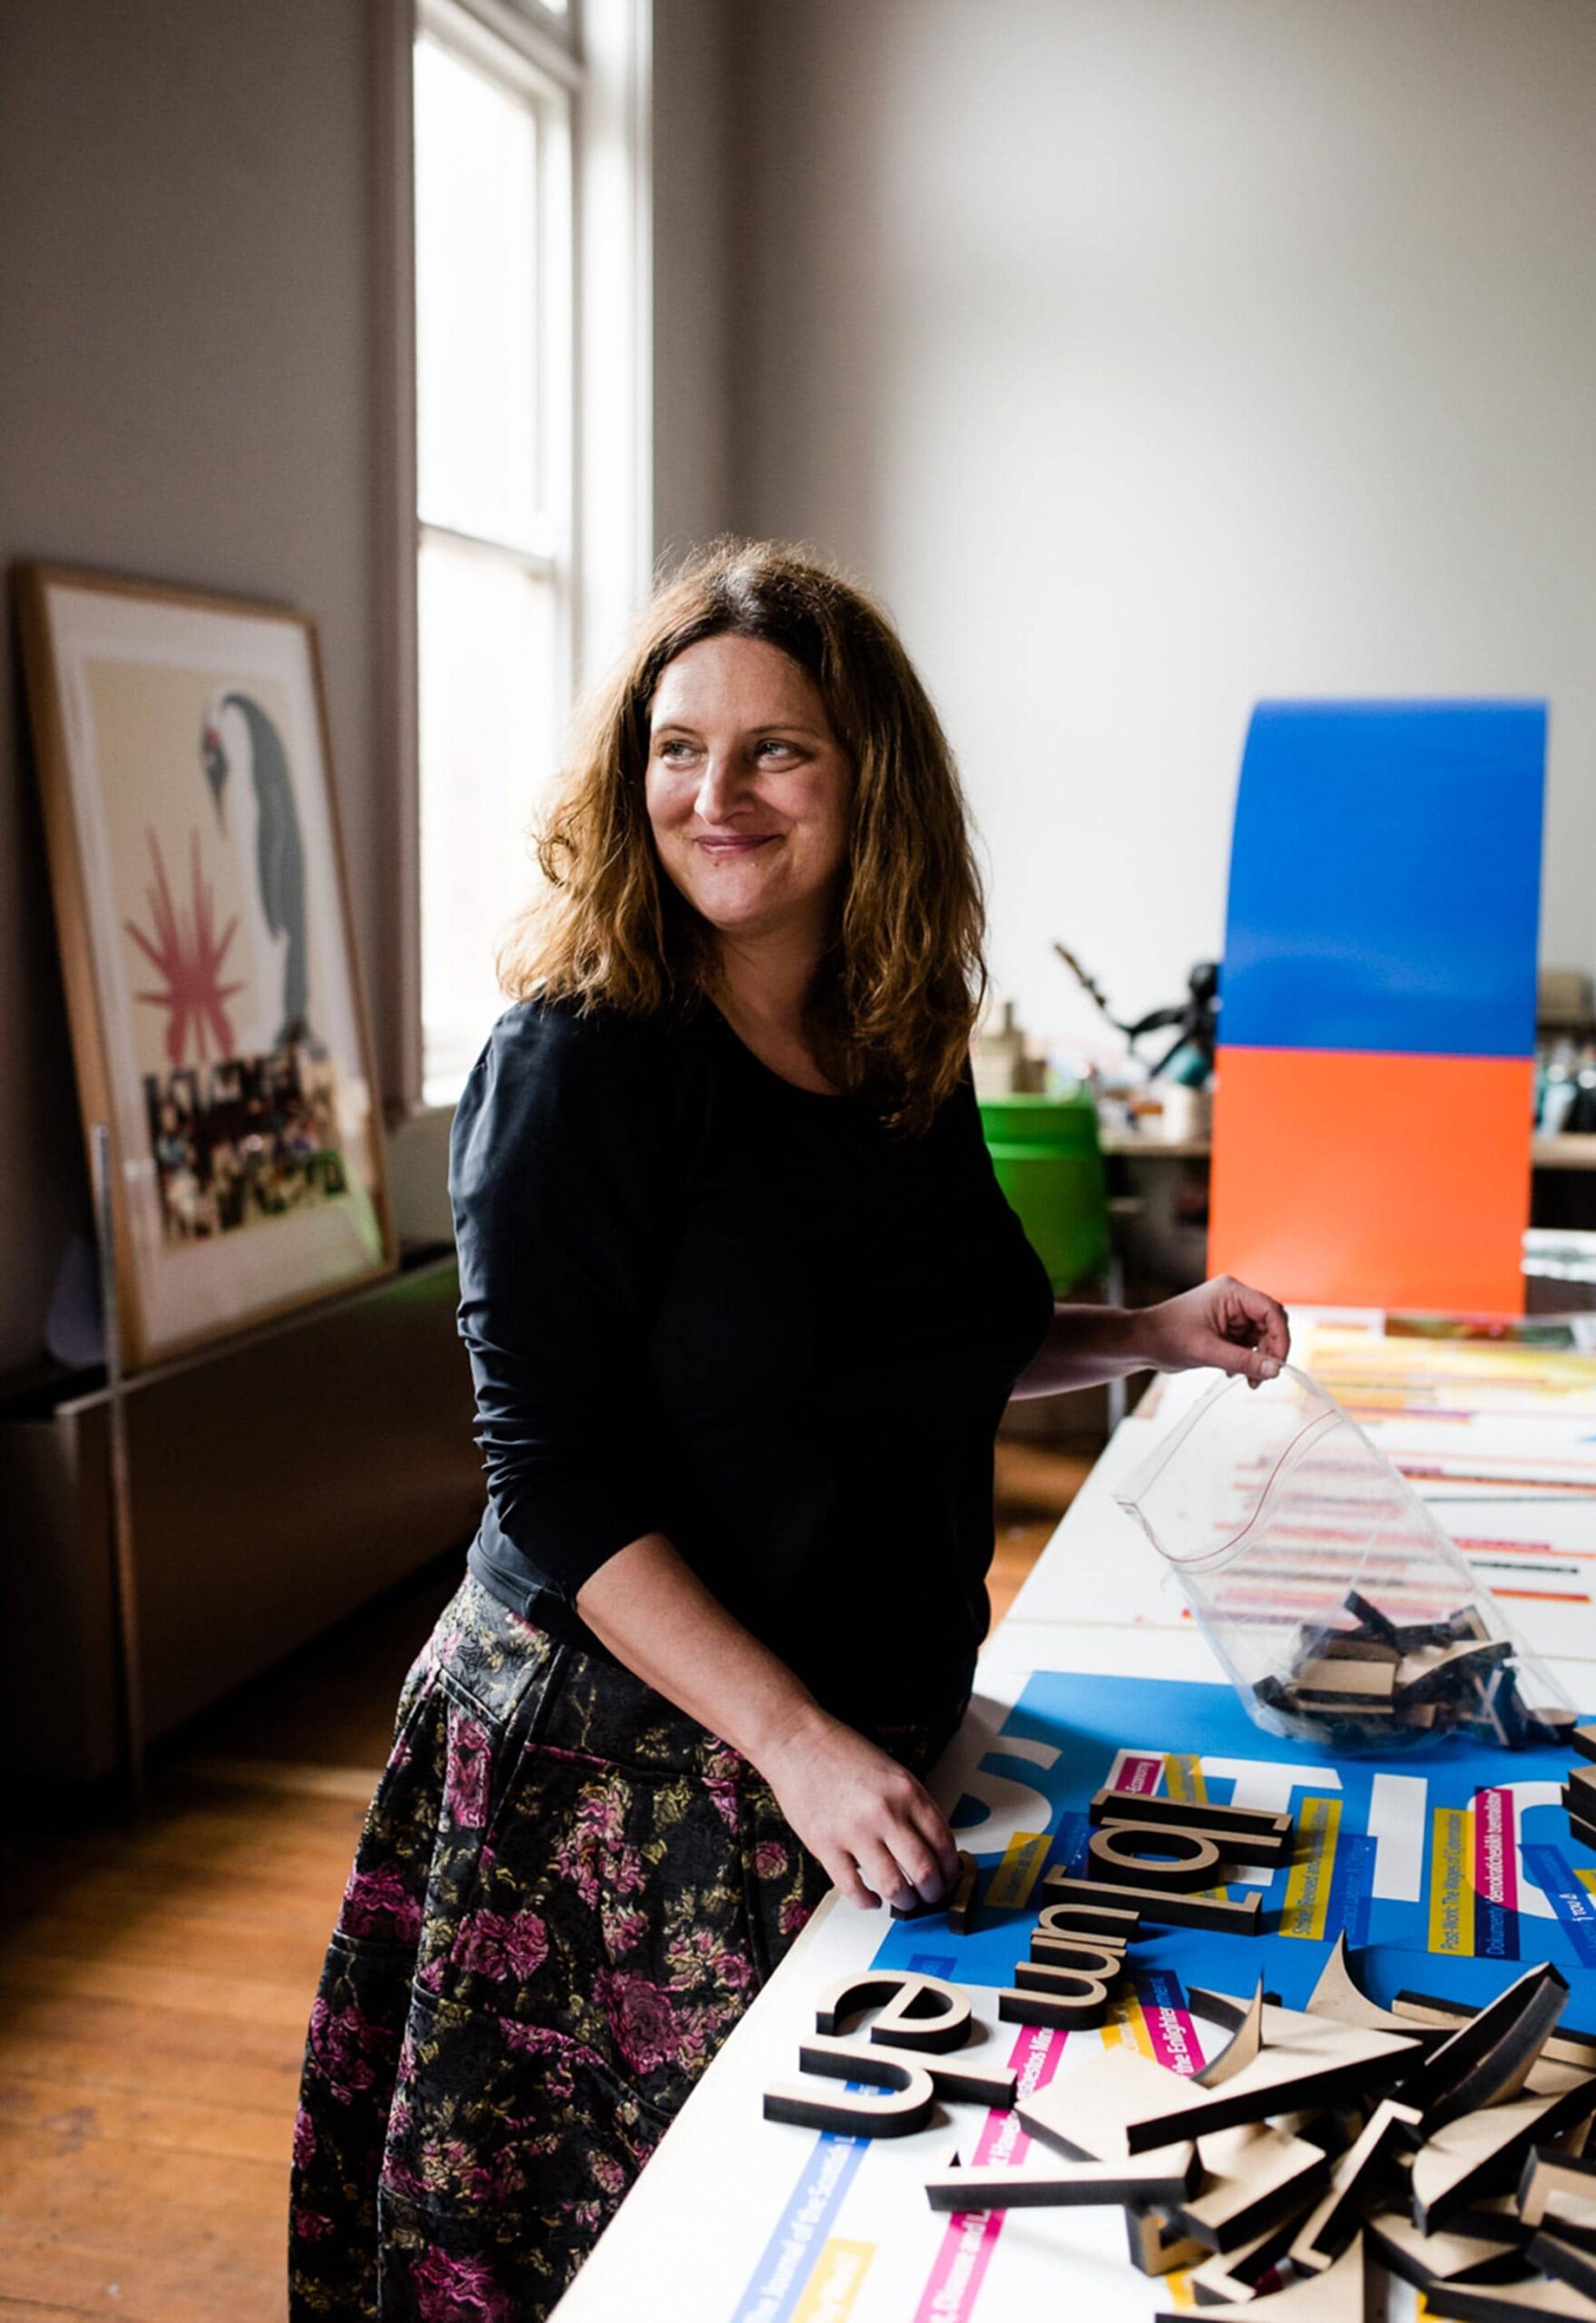 The artist stands at her worktable, smiling over her shoulder